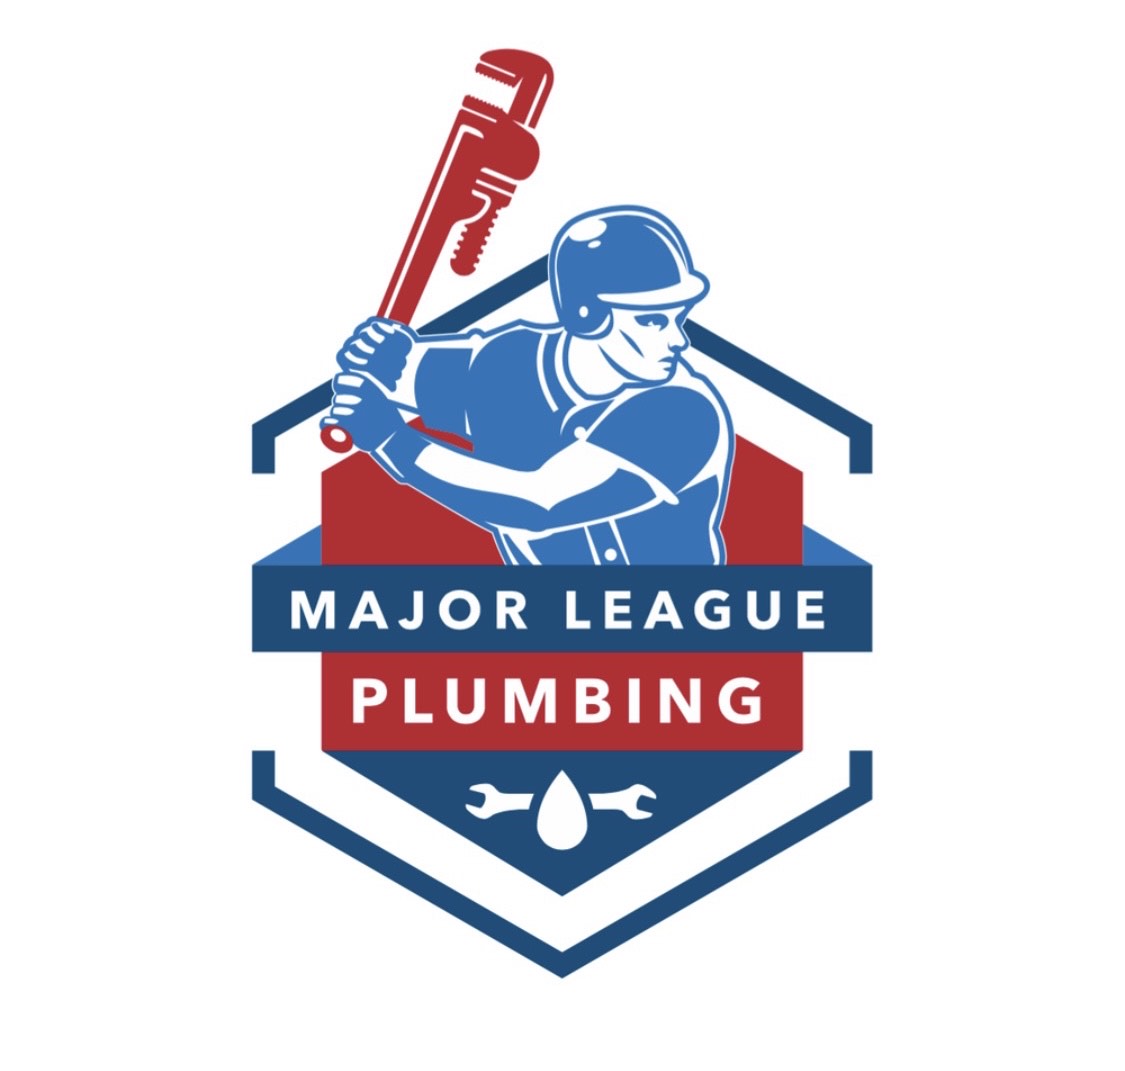 Major League Plumbing - Local Plumbing Contractor Los Angeles, Long Beach & Torrance CA